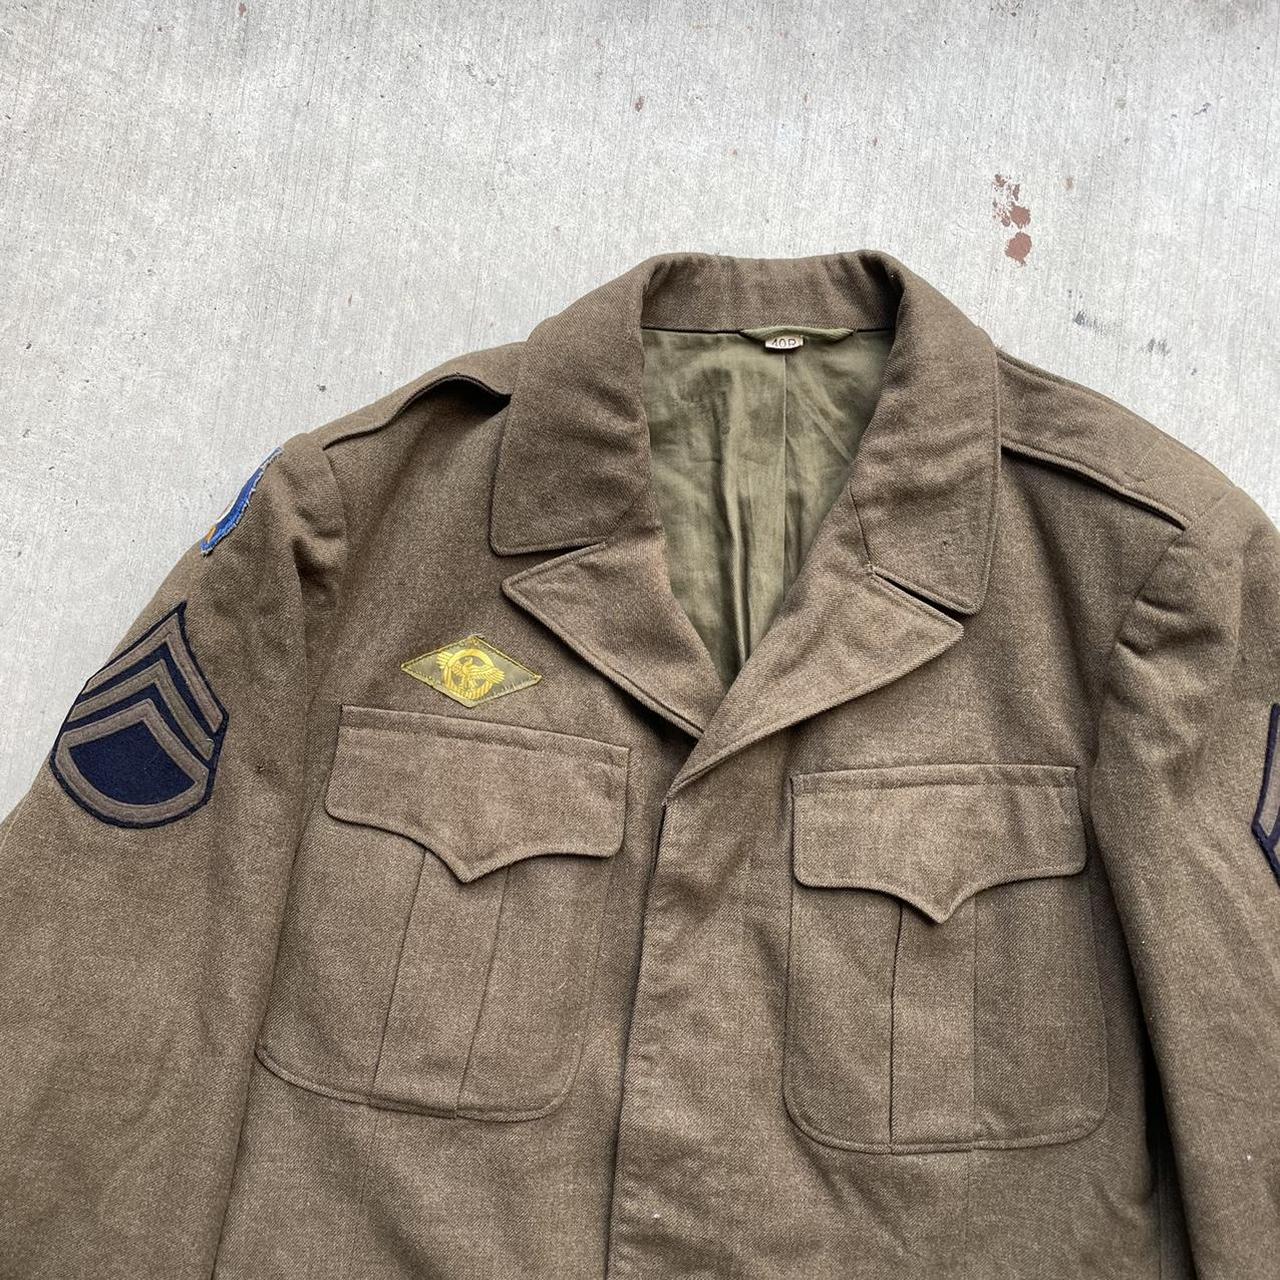 Vintage military jacket world war 2 jacket, vietnam,... - Depop